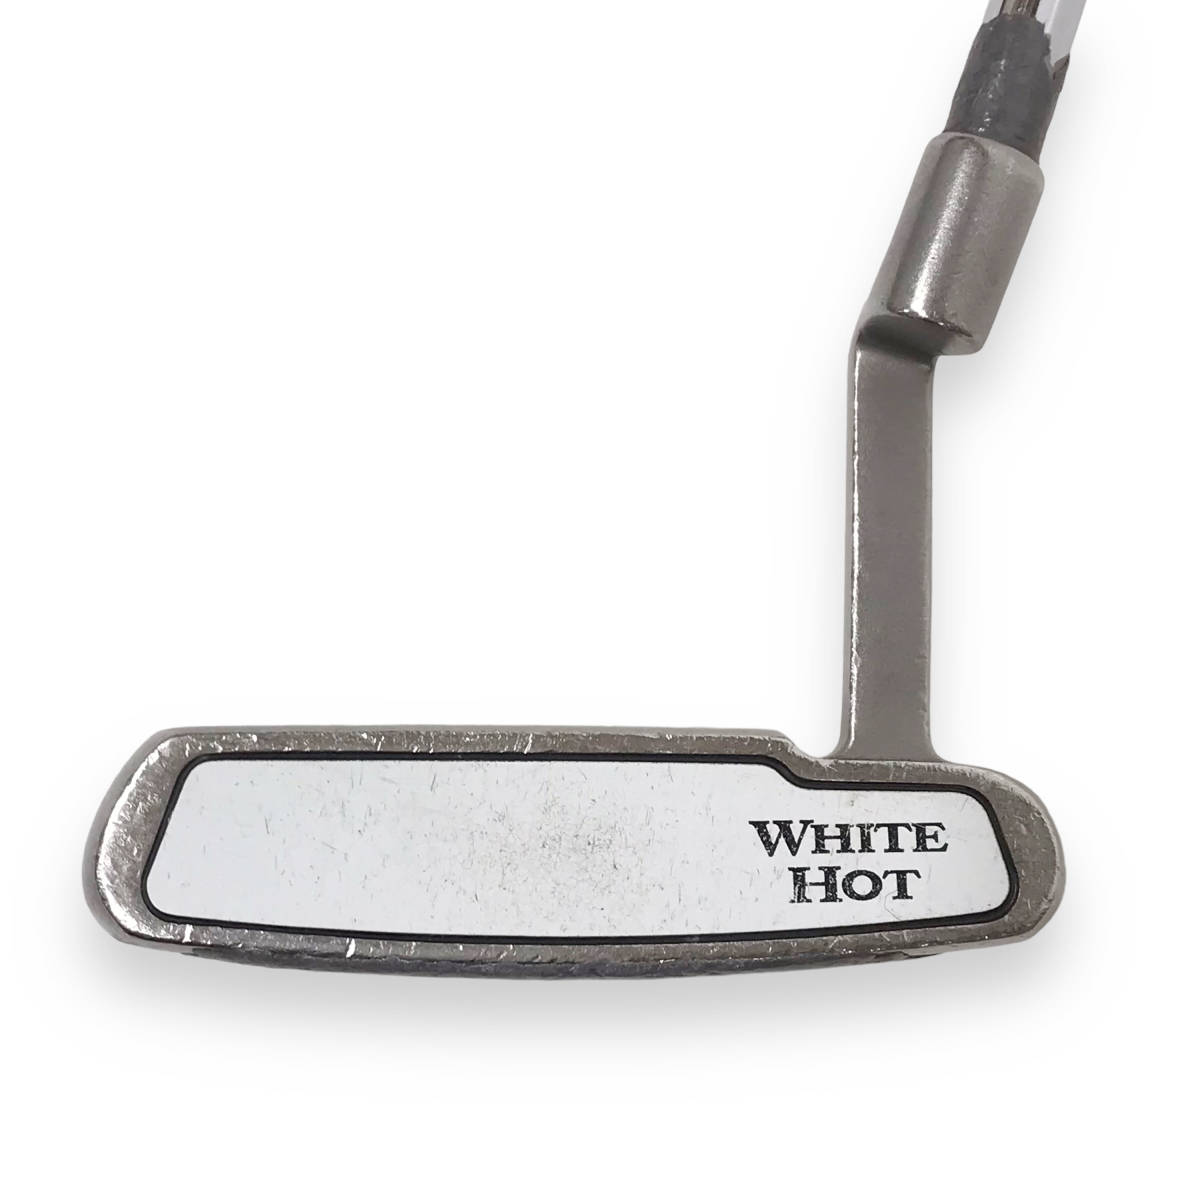 24Y110 5 ODYSSEY Odyssey WHITE HOT putter Golf Club secondhand goods 